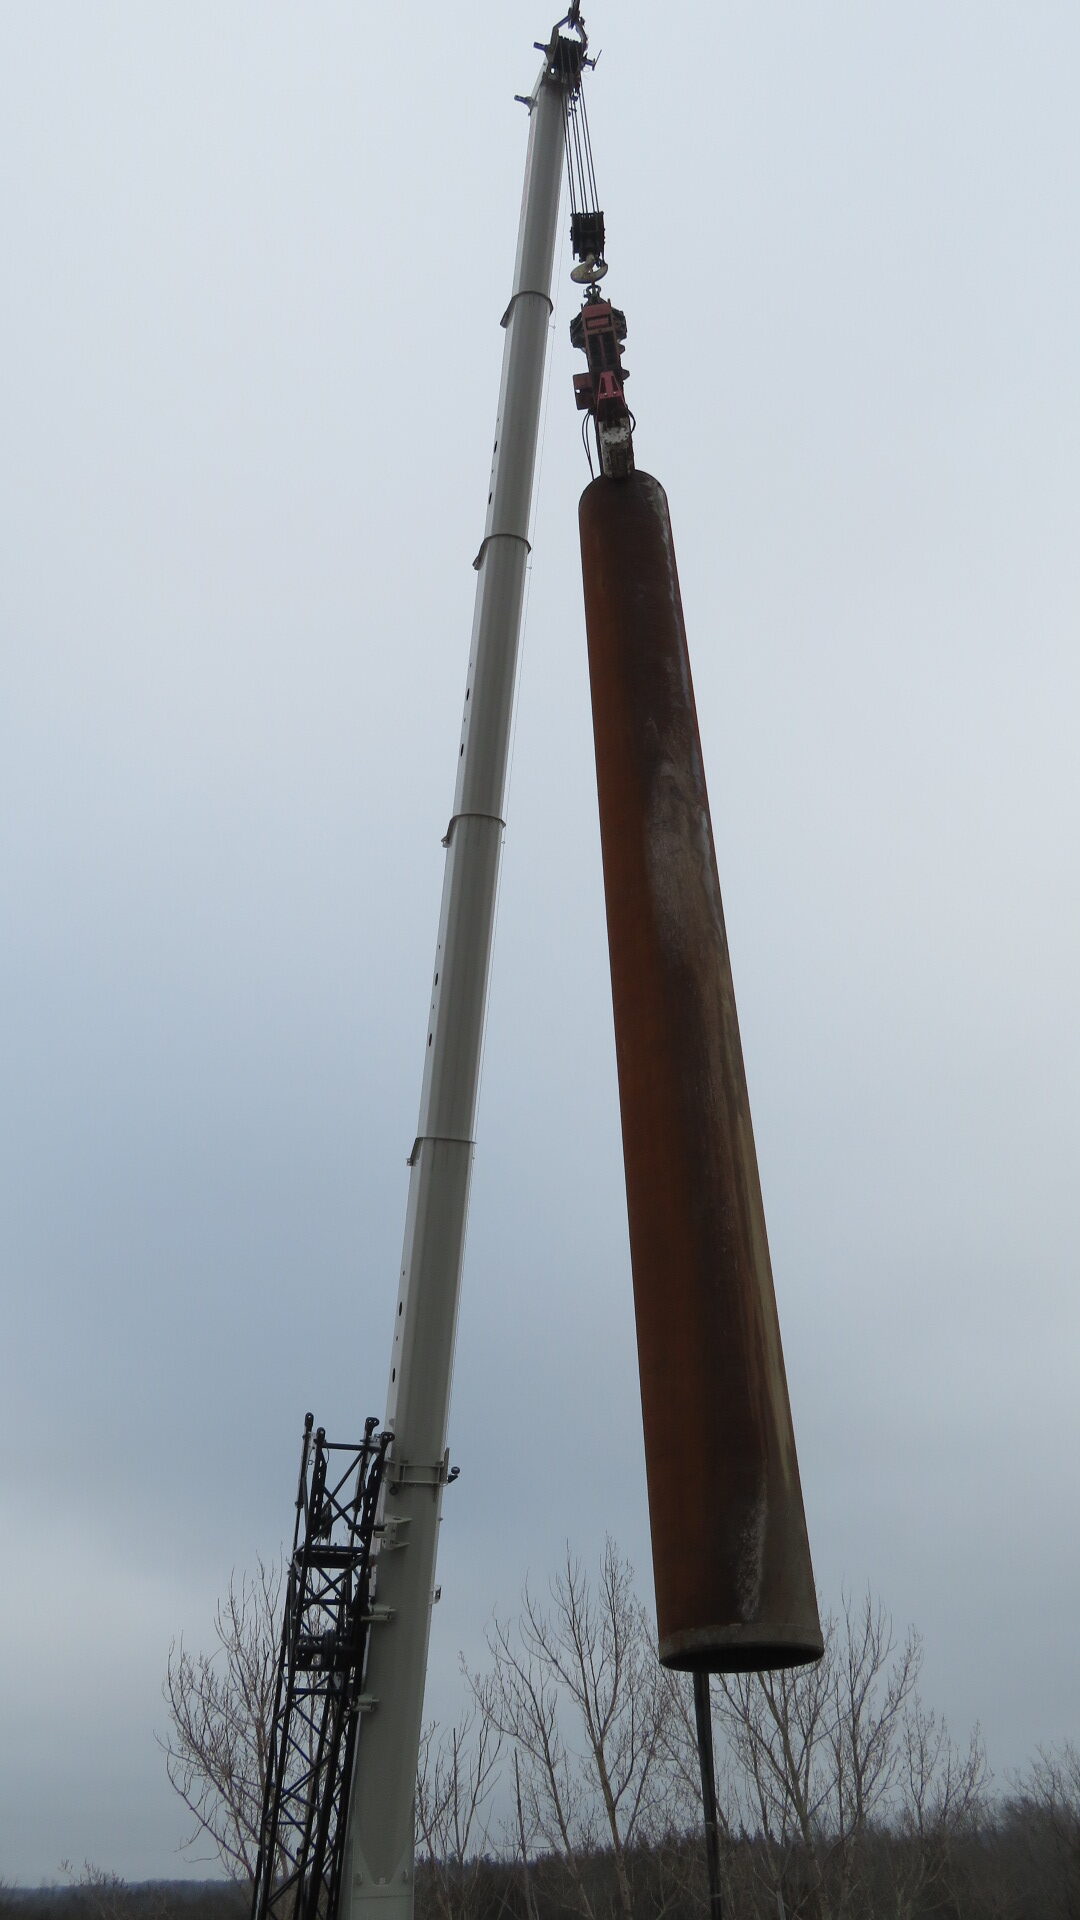 160-ton crane lifting the caisson liner to the bridge deck